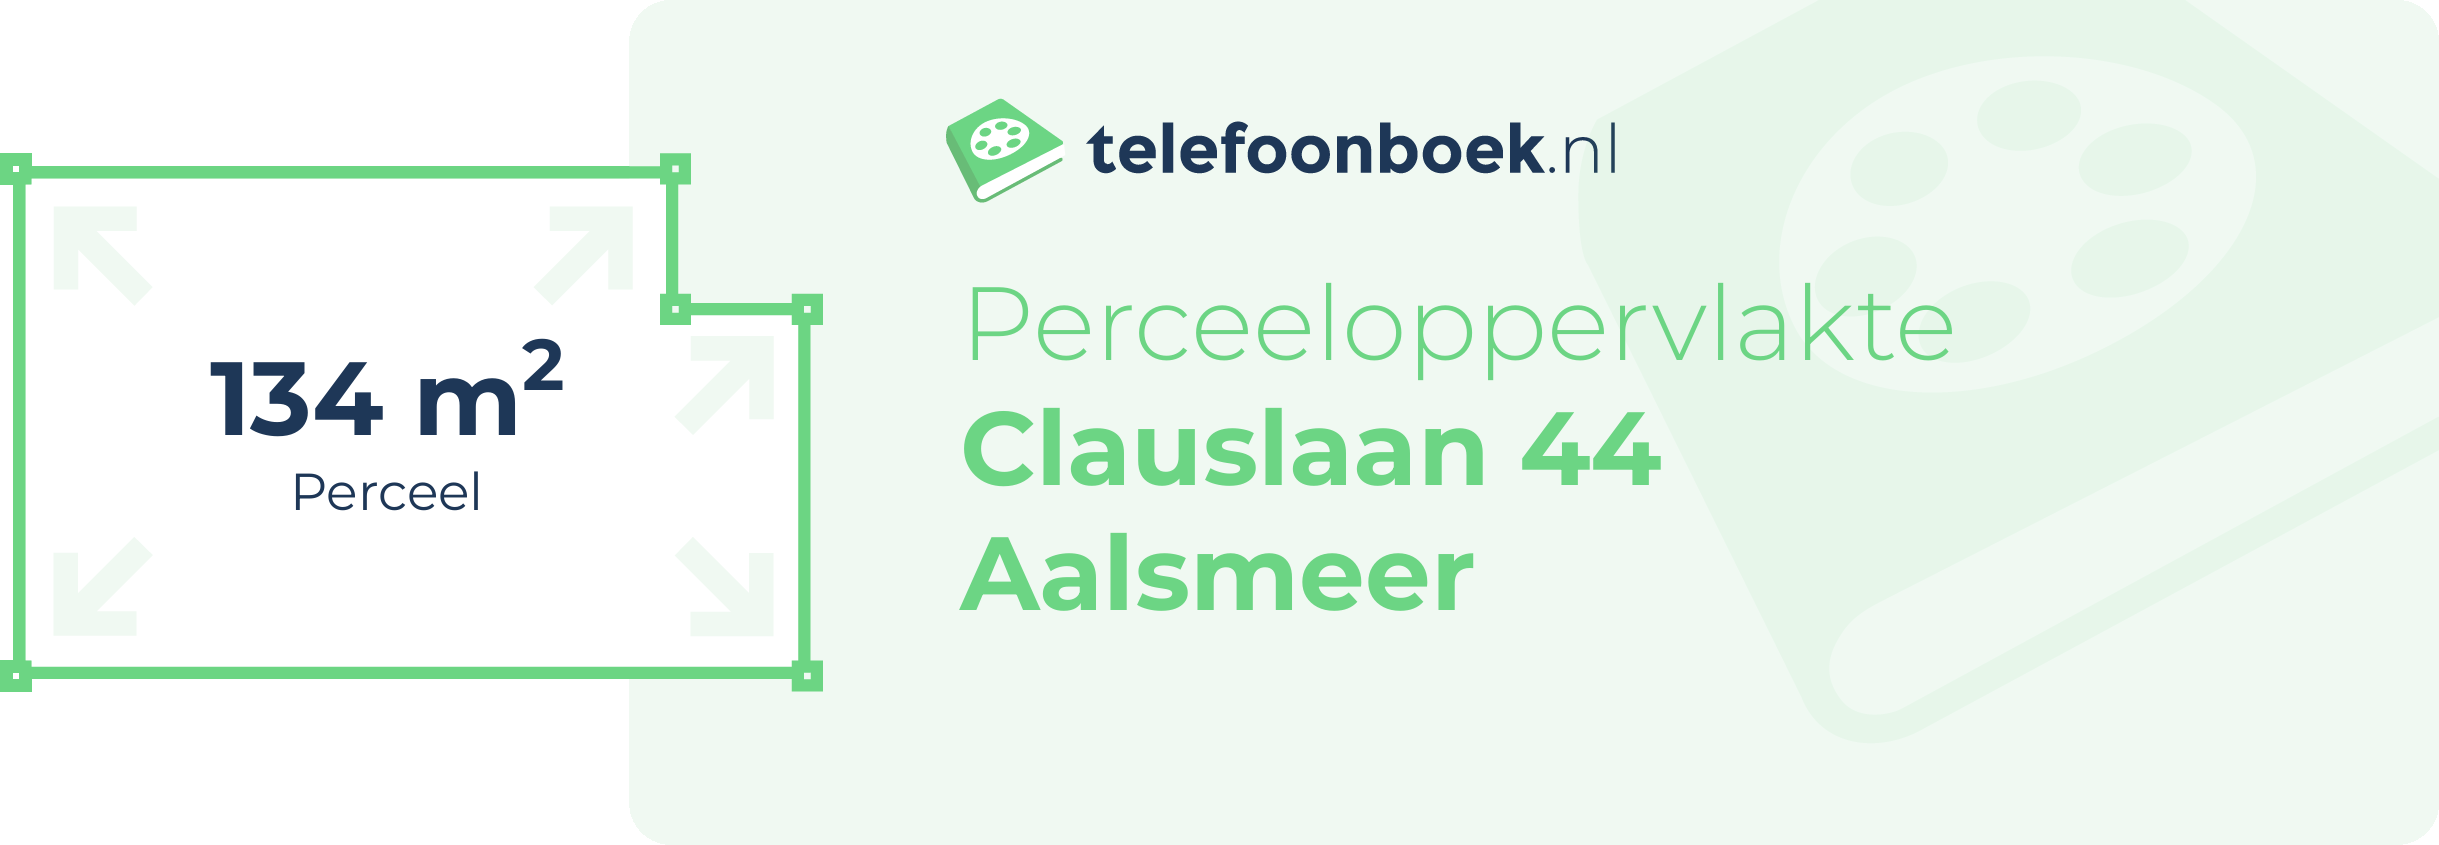 Perceeloppervlakte Clauslaan 44 Aalsmeer